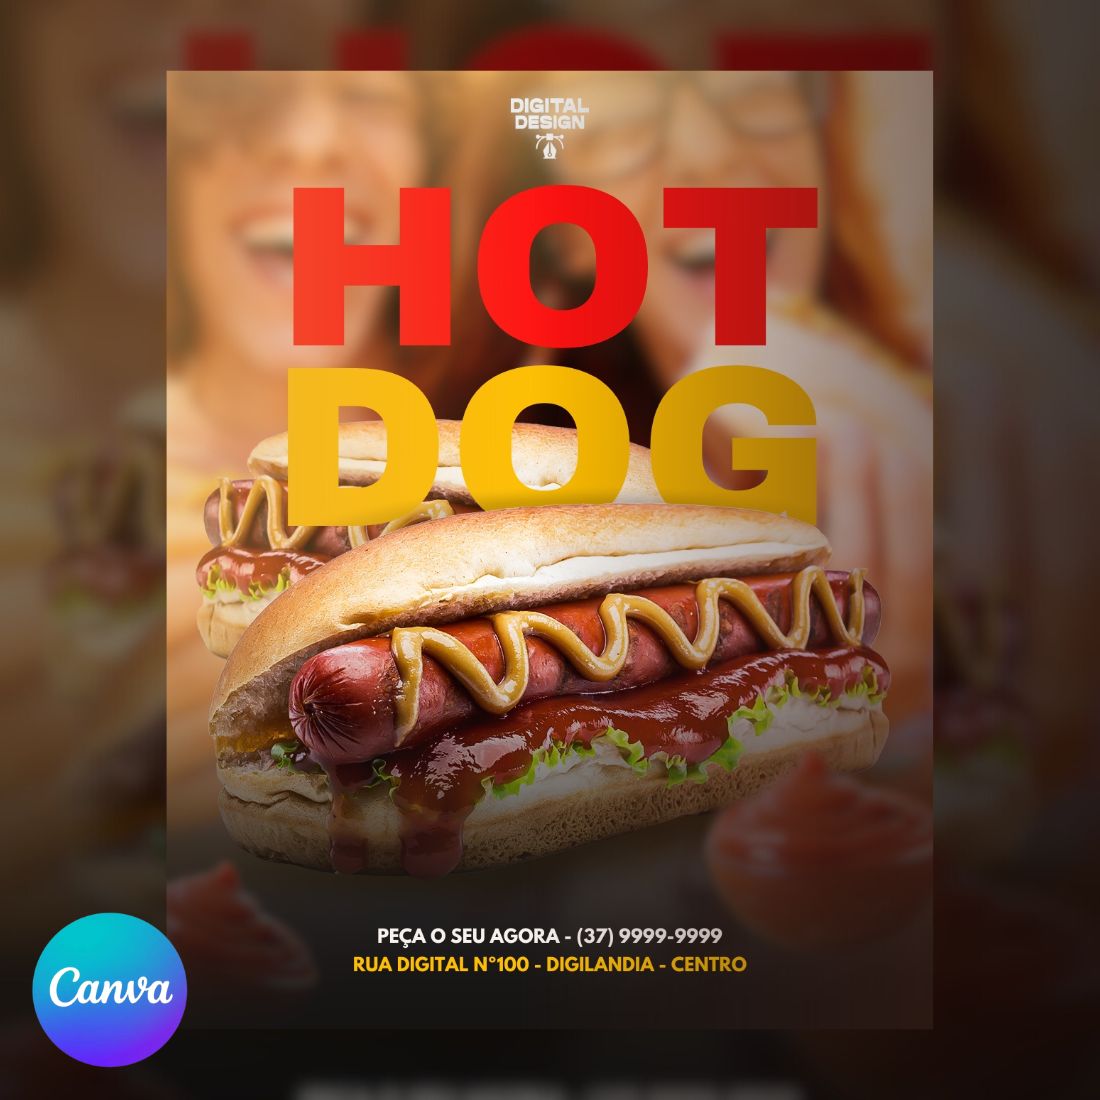 hotdog image 1 405